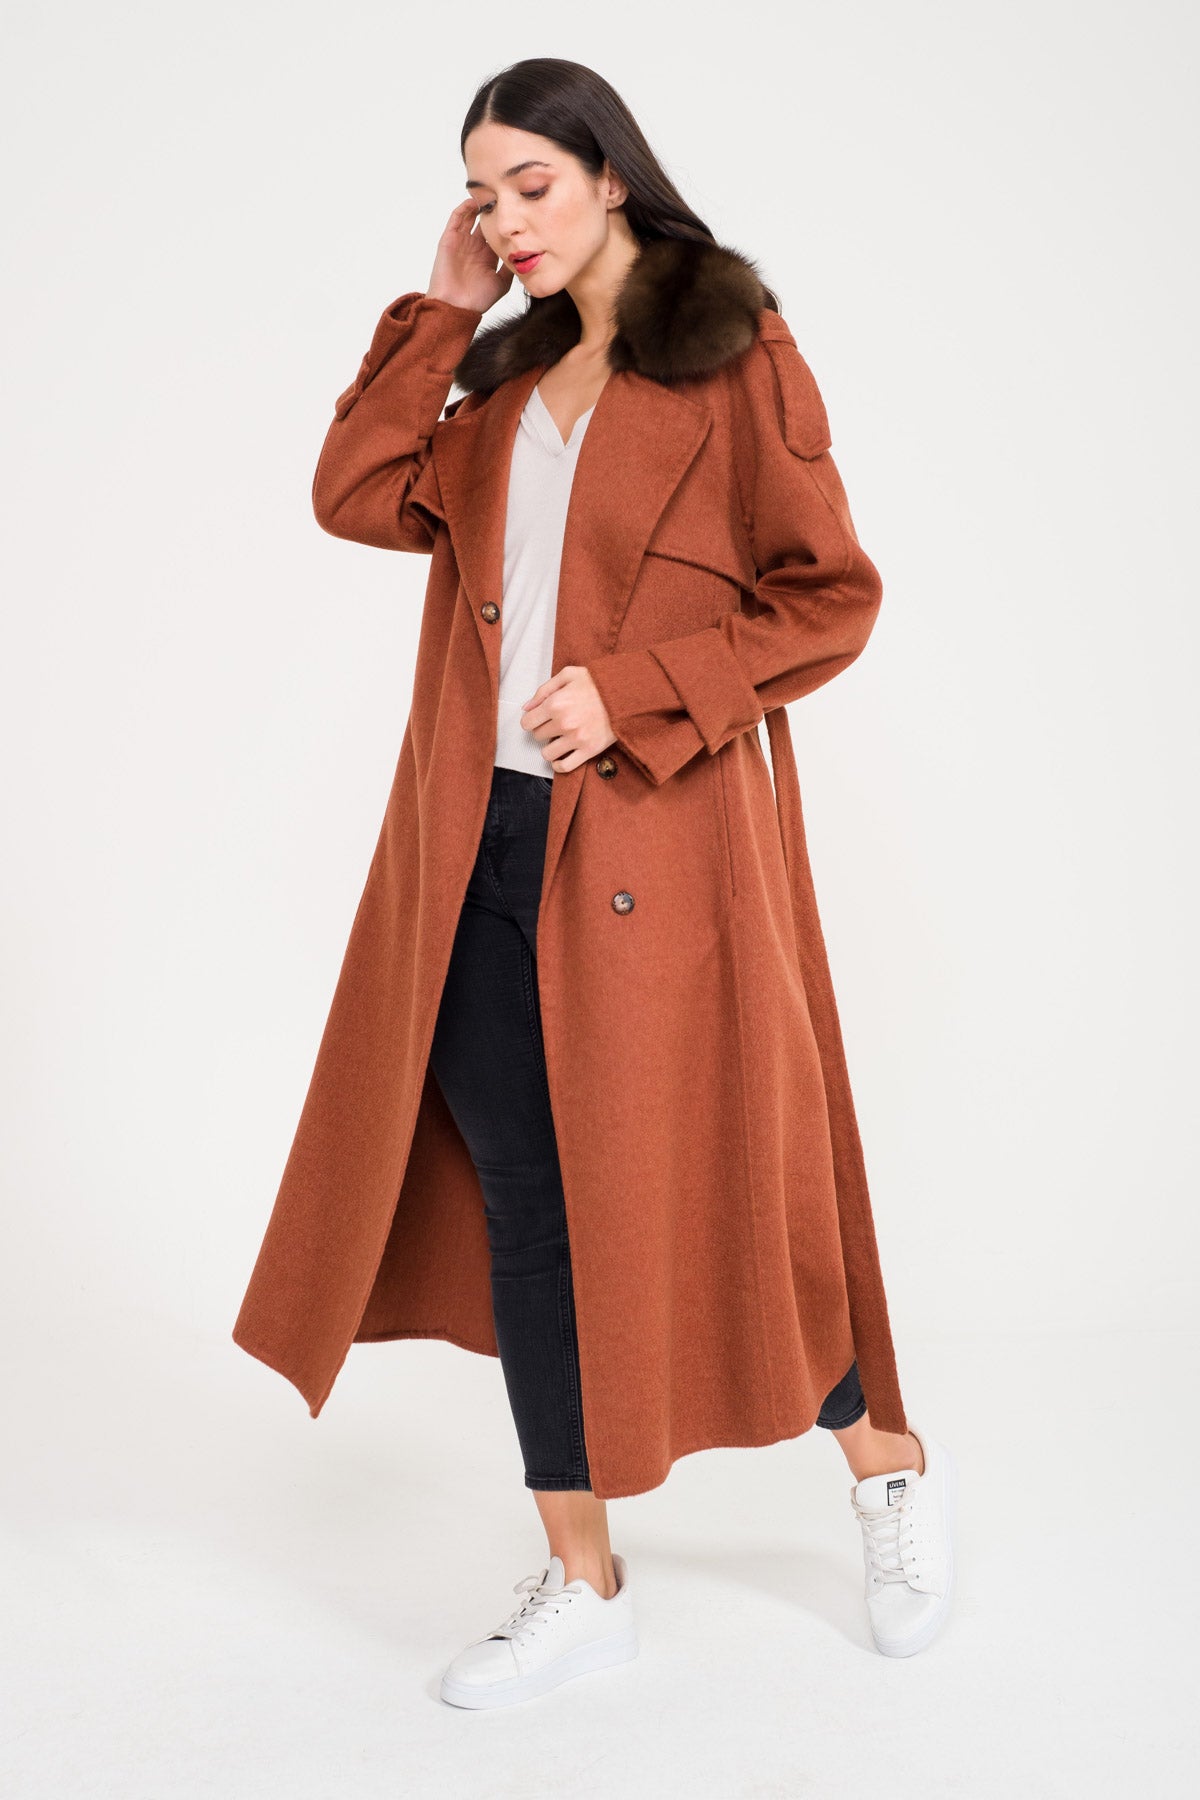 Tile Red Wool Long Coat